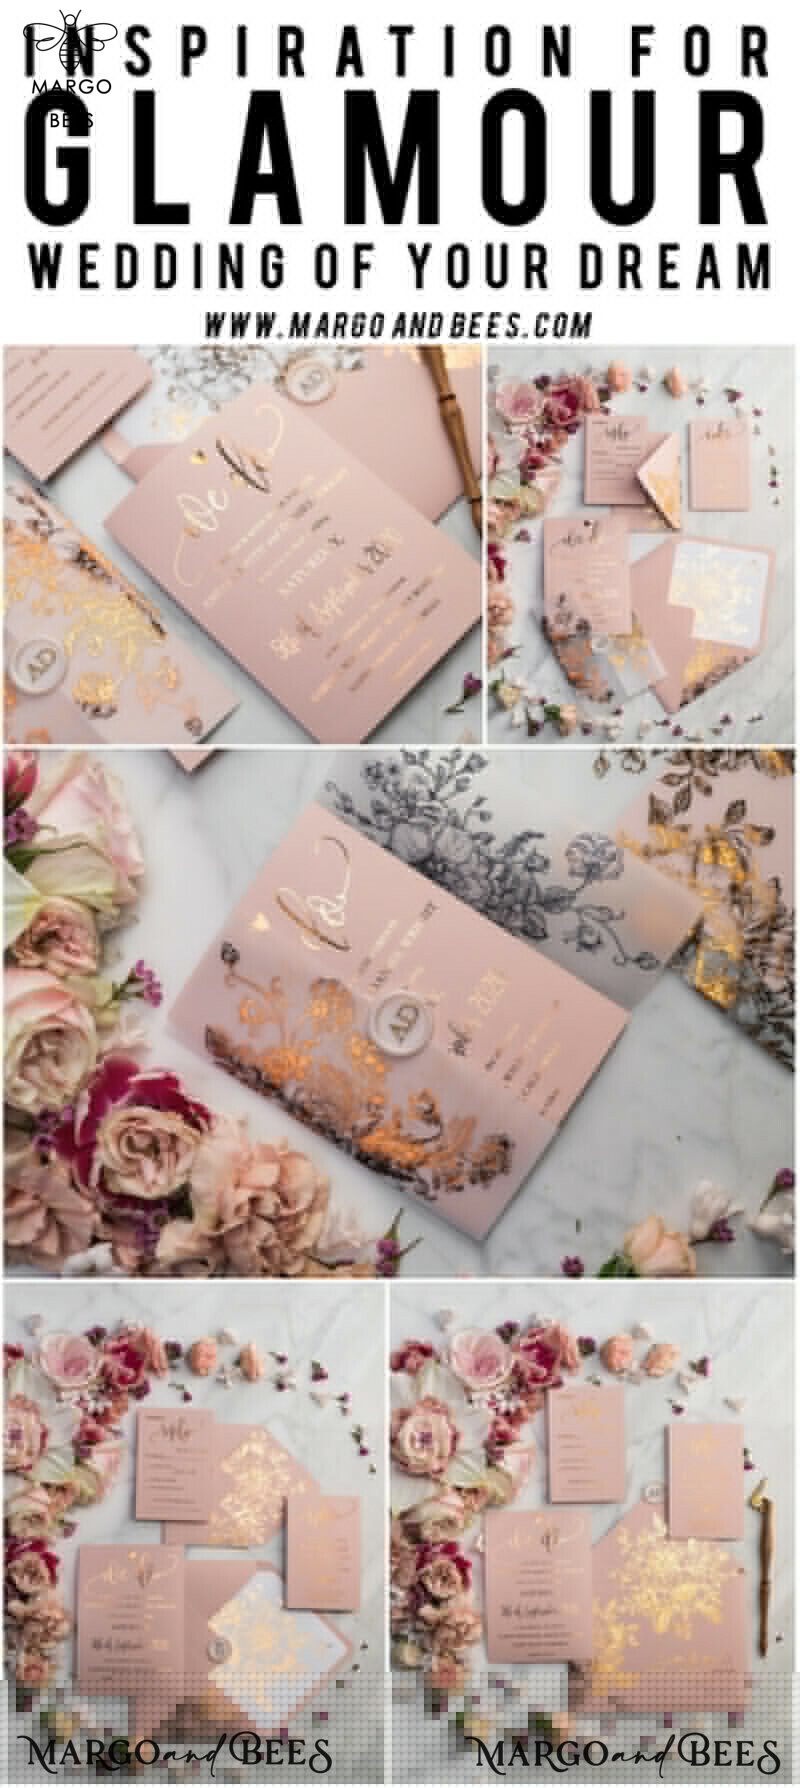 Luxury Vellum Gold Foil Wedding Invitations: Add Glamour to Your Elegant Blush Pink Wedding Invitation Suite with Golden Shine Wedding Cards-61